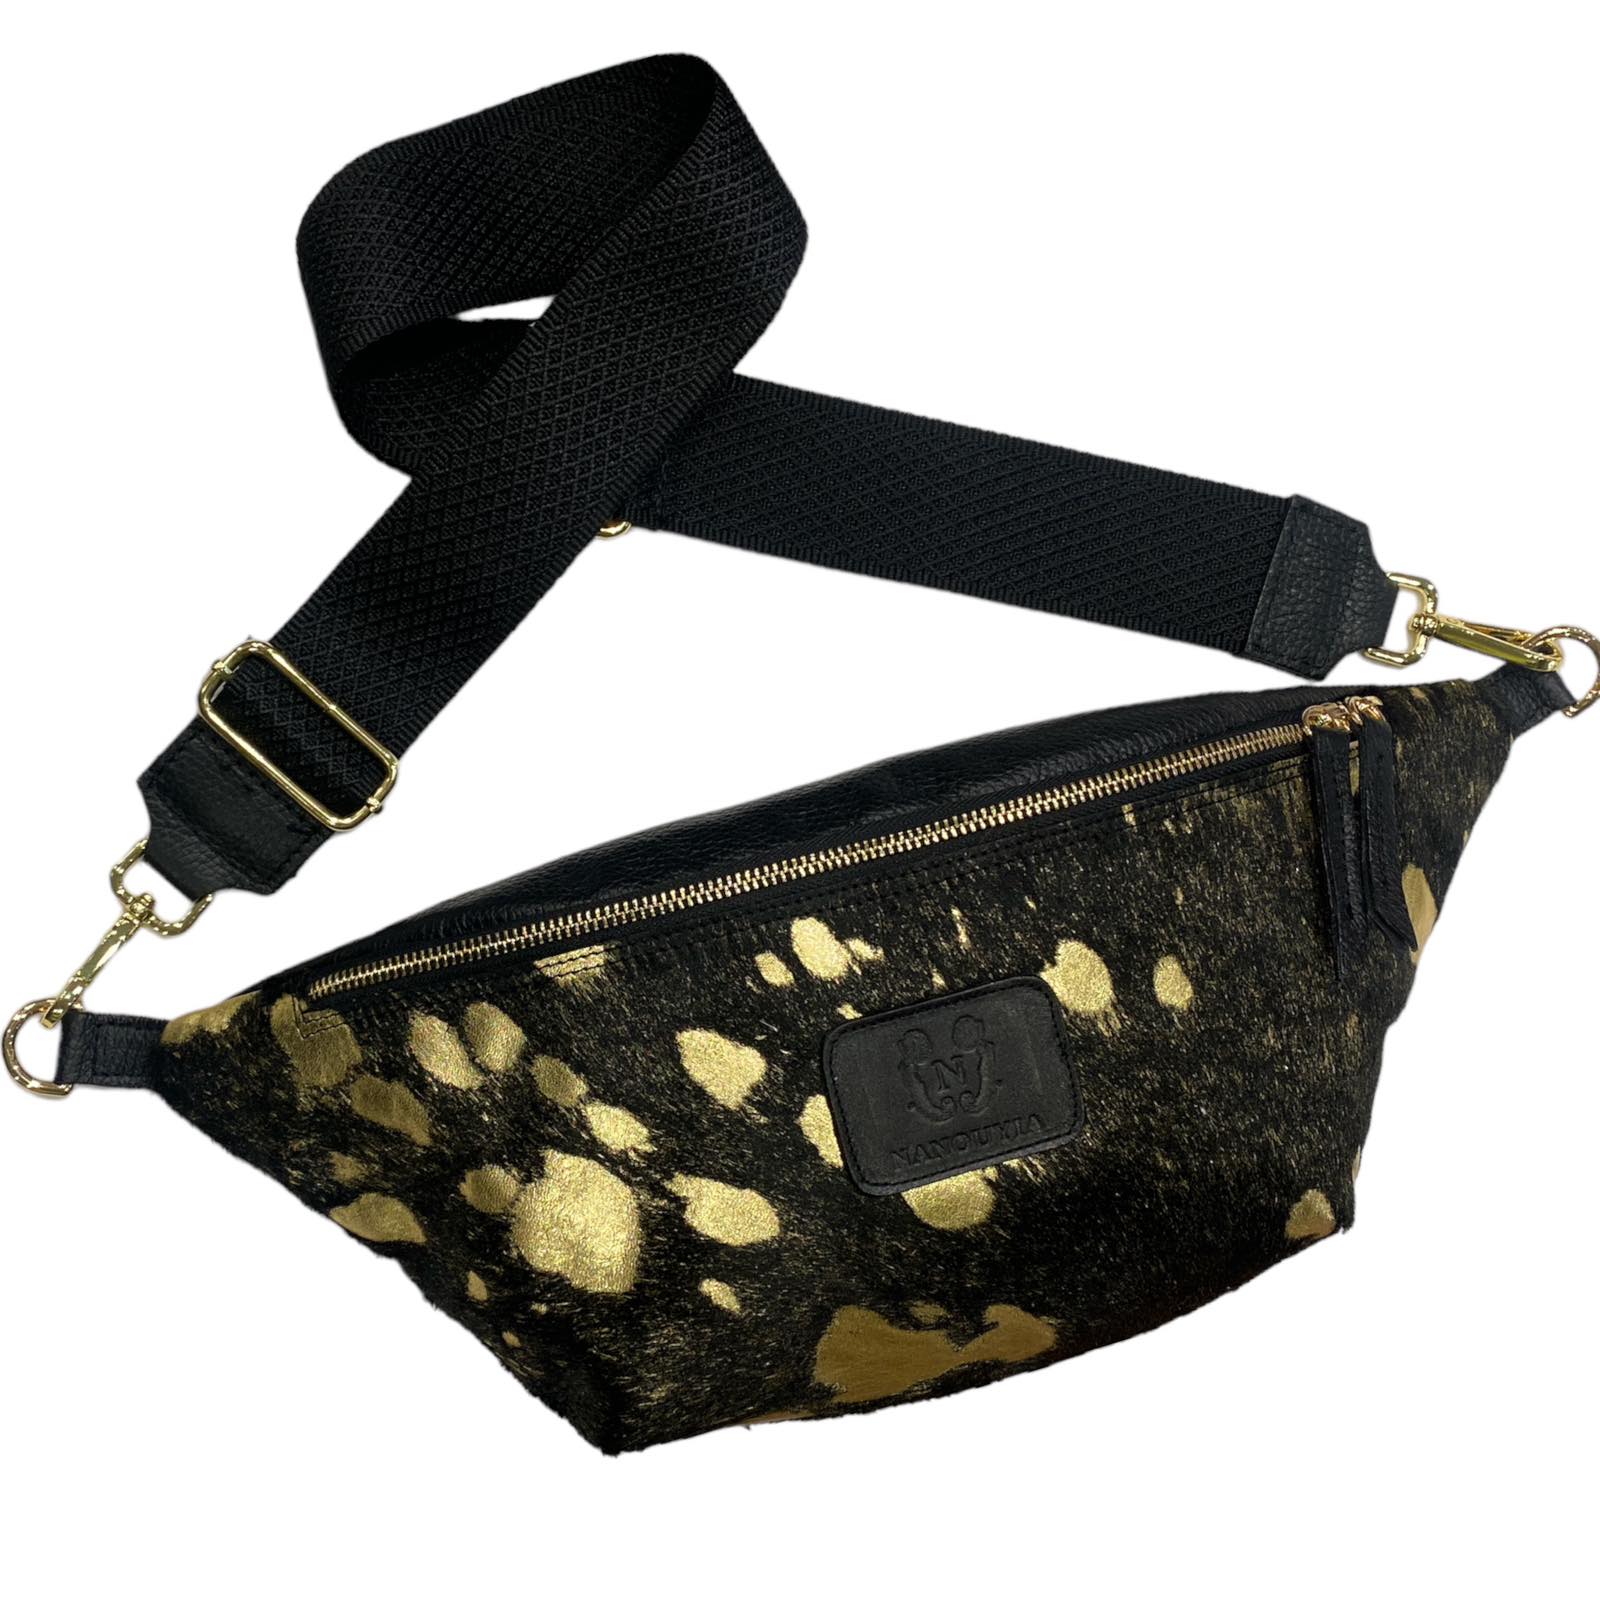 XL black and gold vintage calf-hair leather belt bag